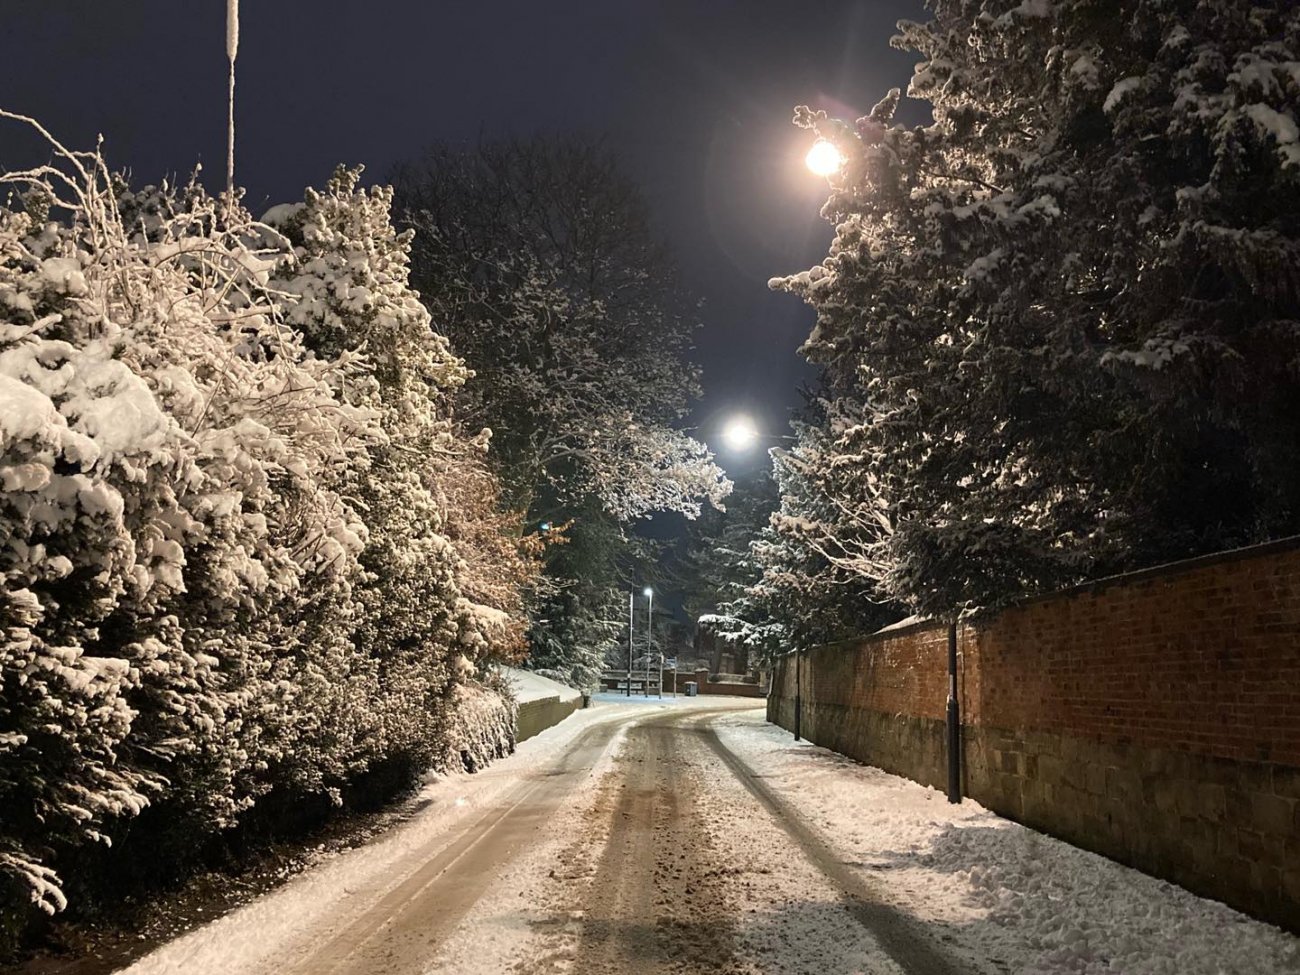 Photograph of Snowy Spondon Nights - Church Street